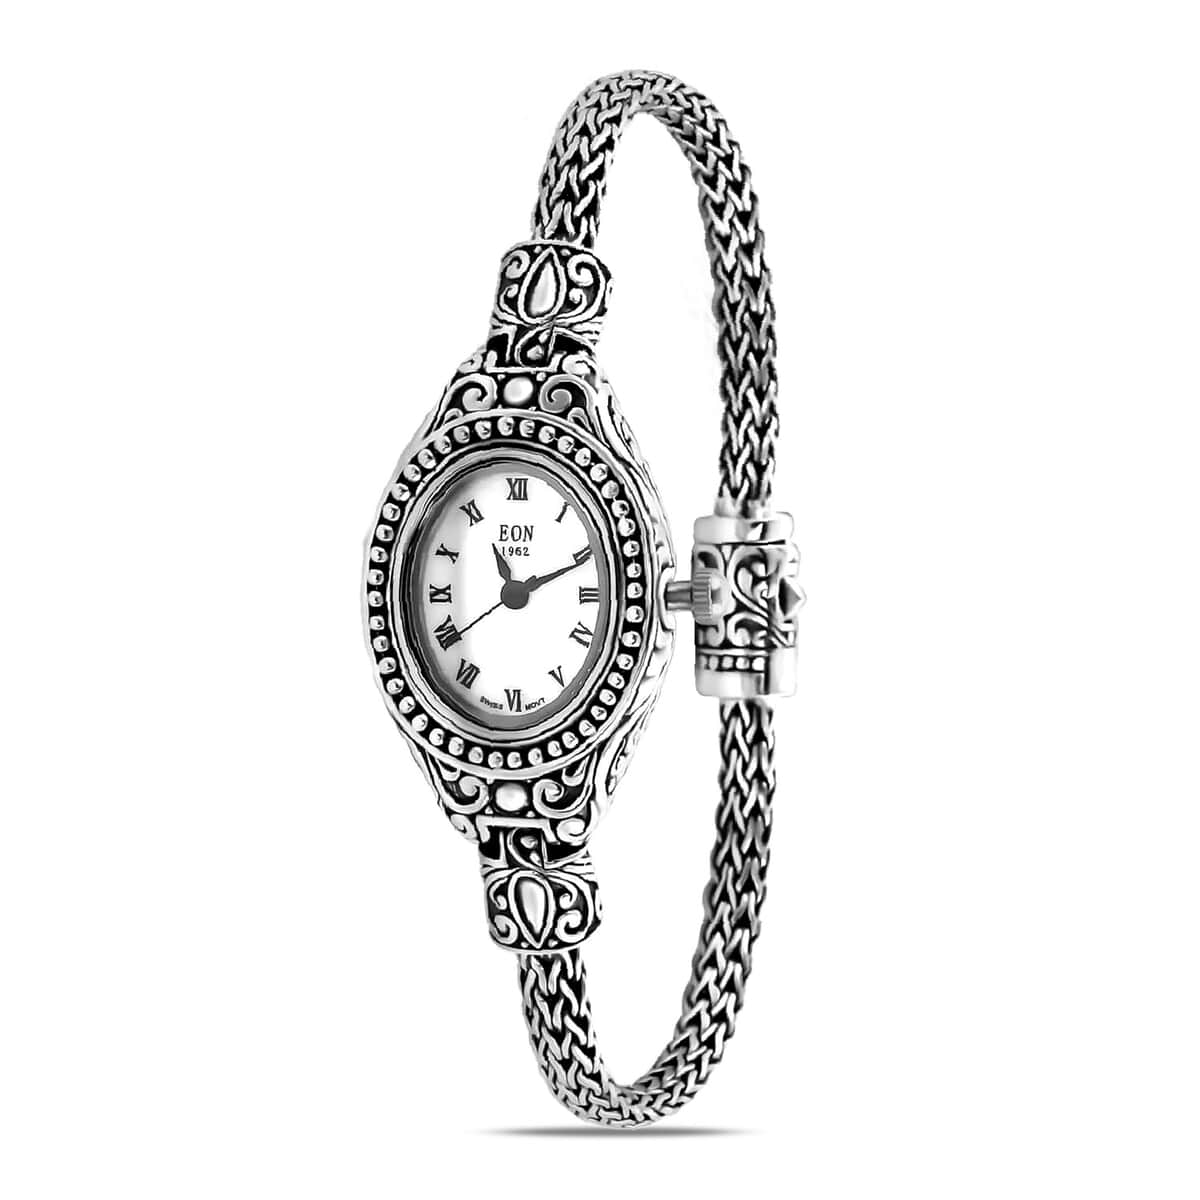 Bali Legacy Eon 1962 Swiss Movement Sterling Silver Tulang Naga Bracelet Watch (8 in), Designer Bracelet Watch, Analog Luxury Wristwatch image number 0